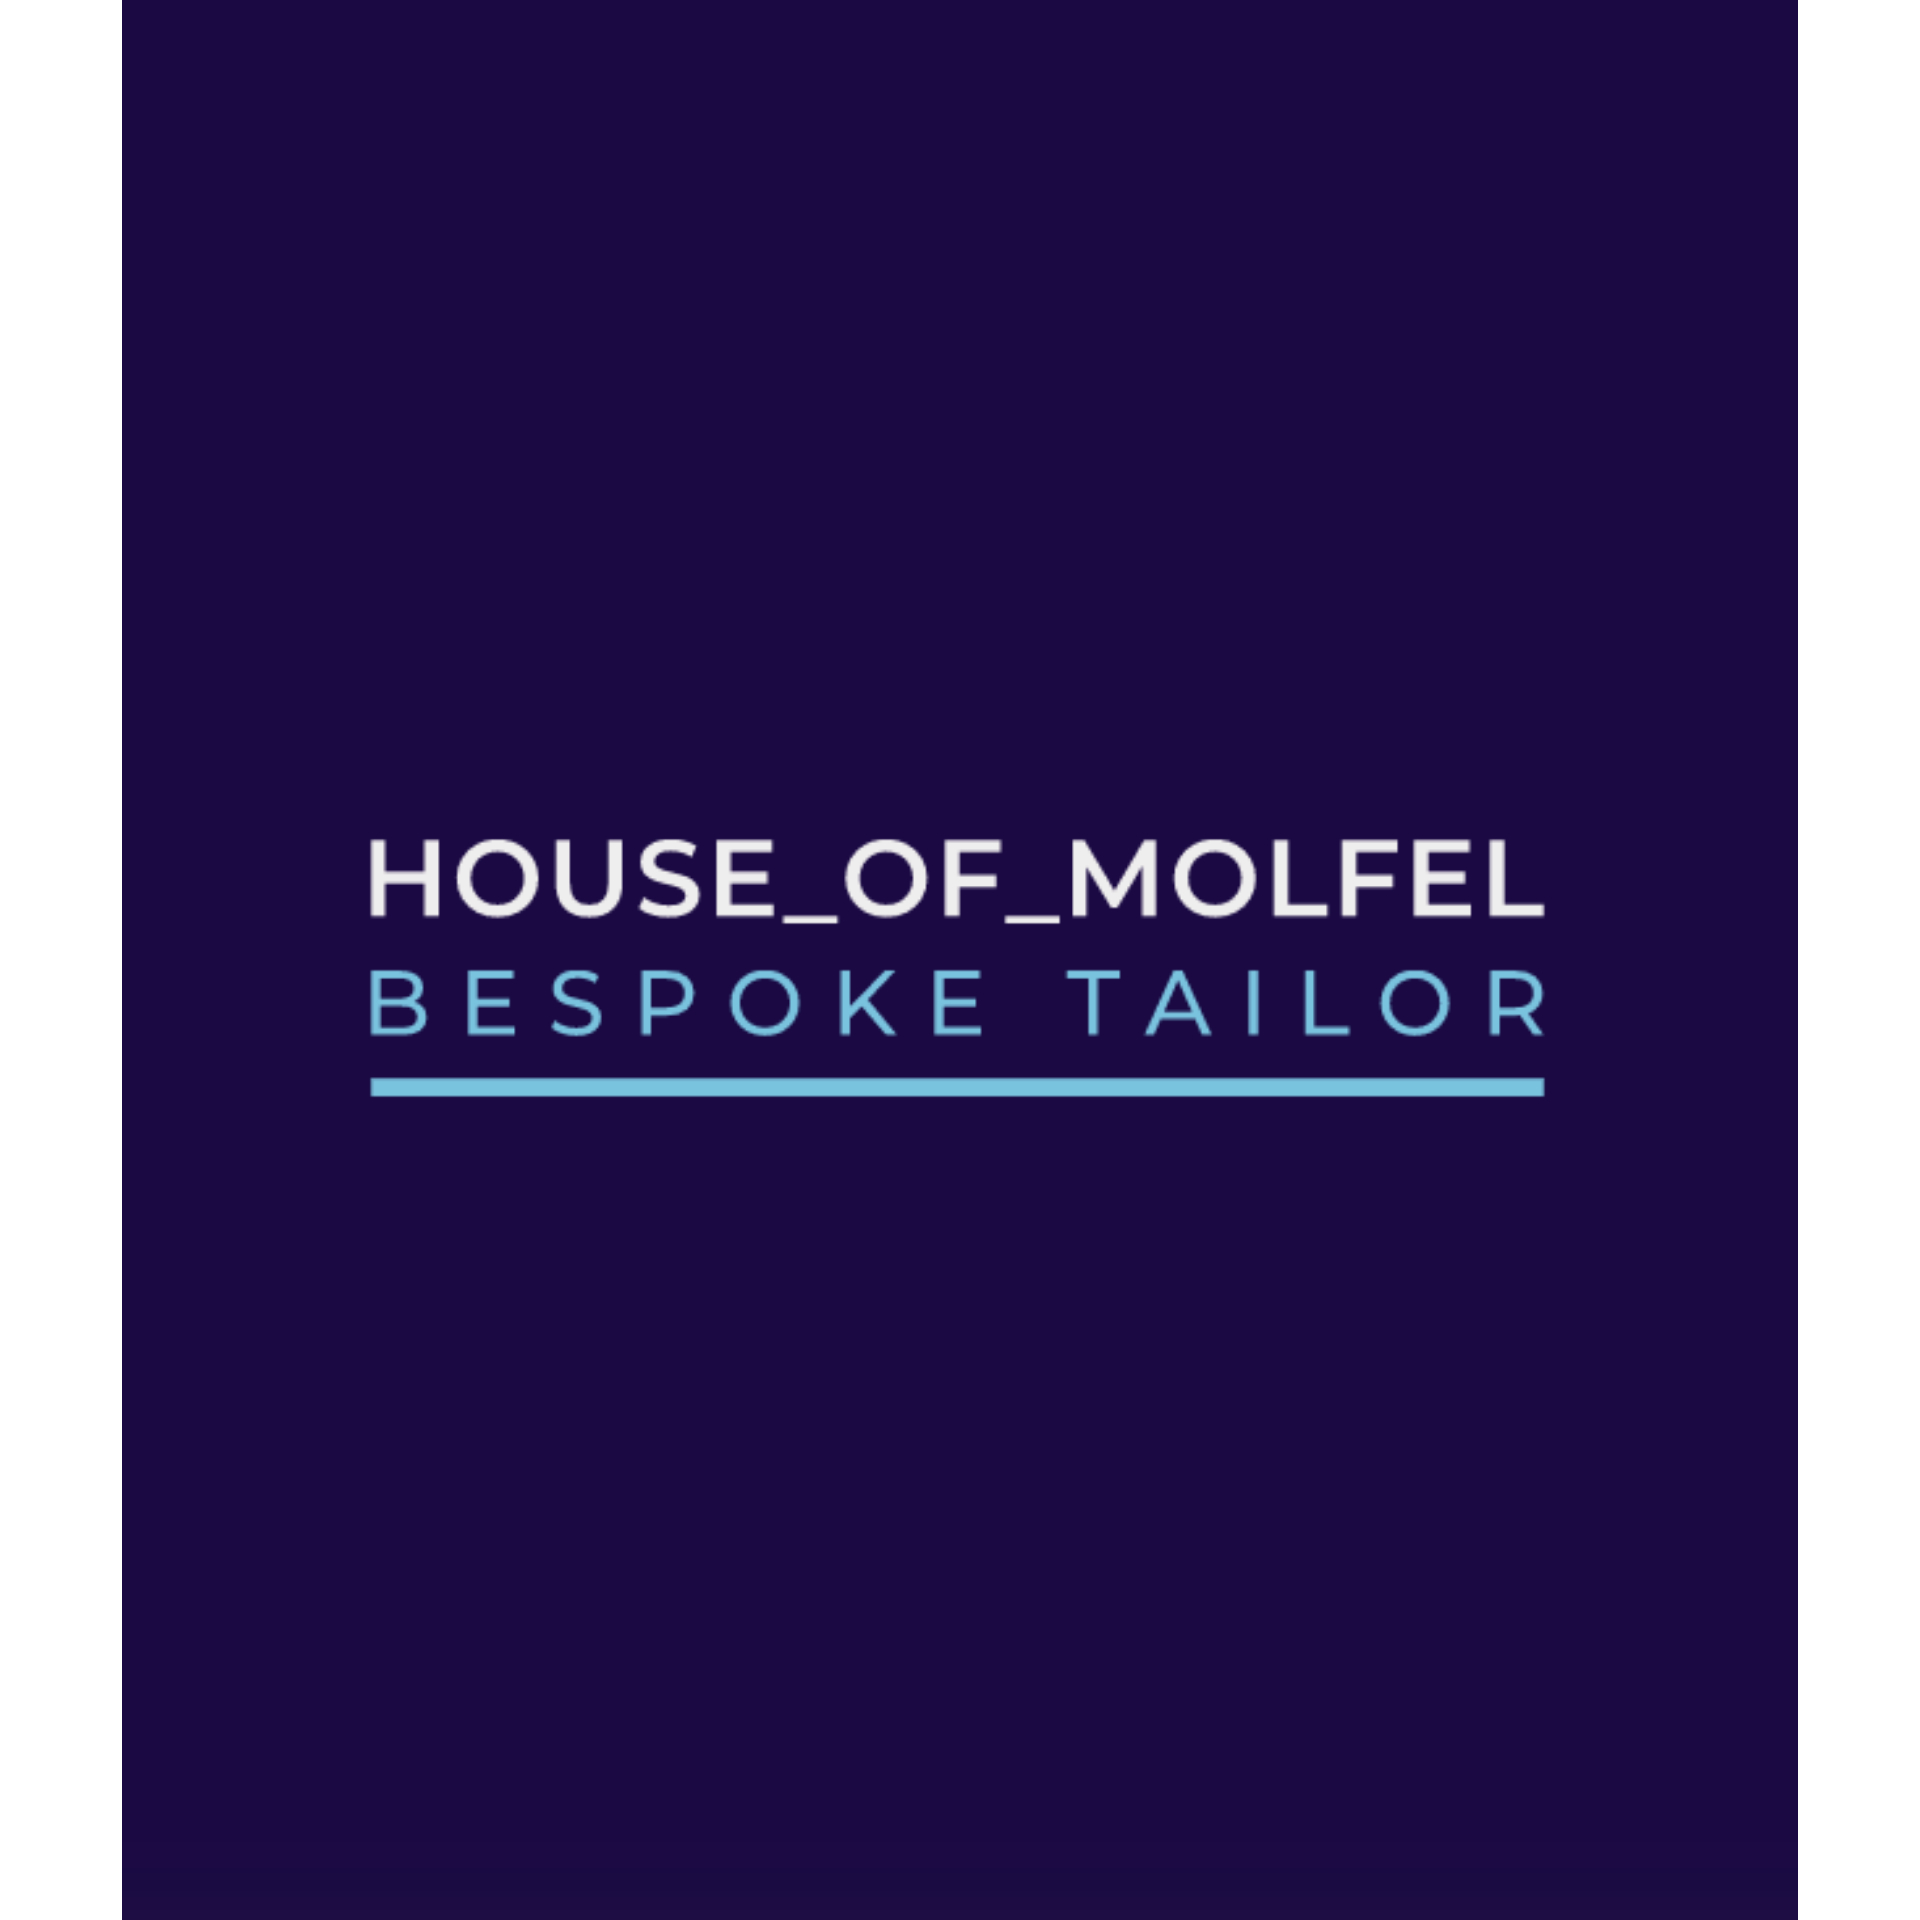 House_of_molfel provider